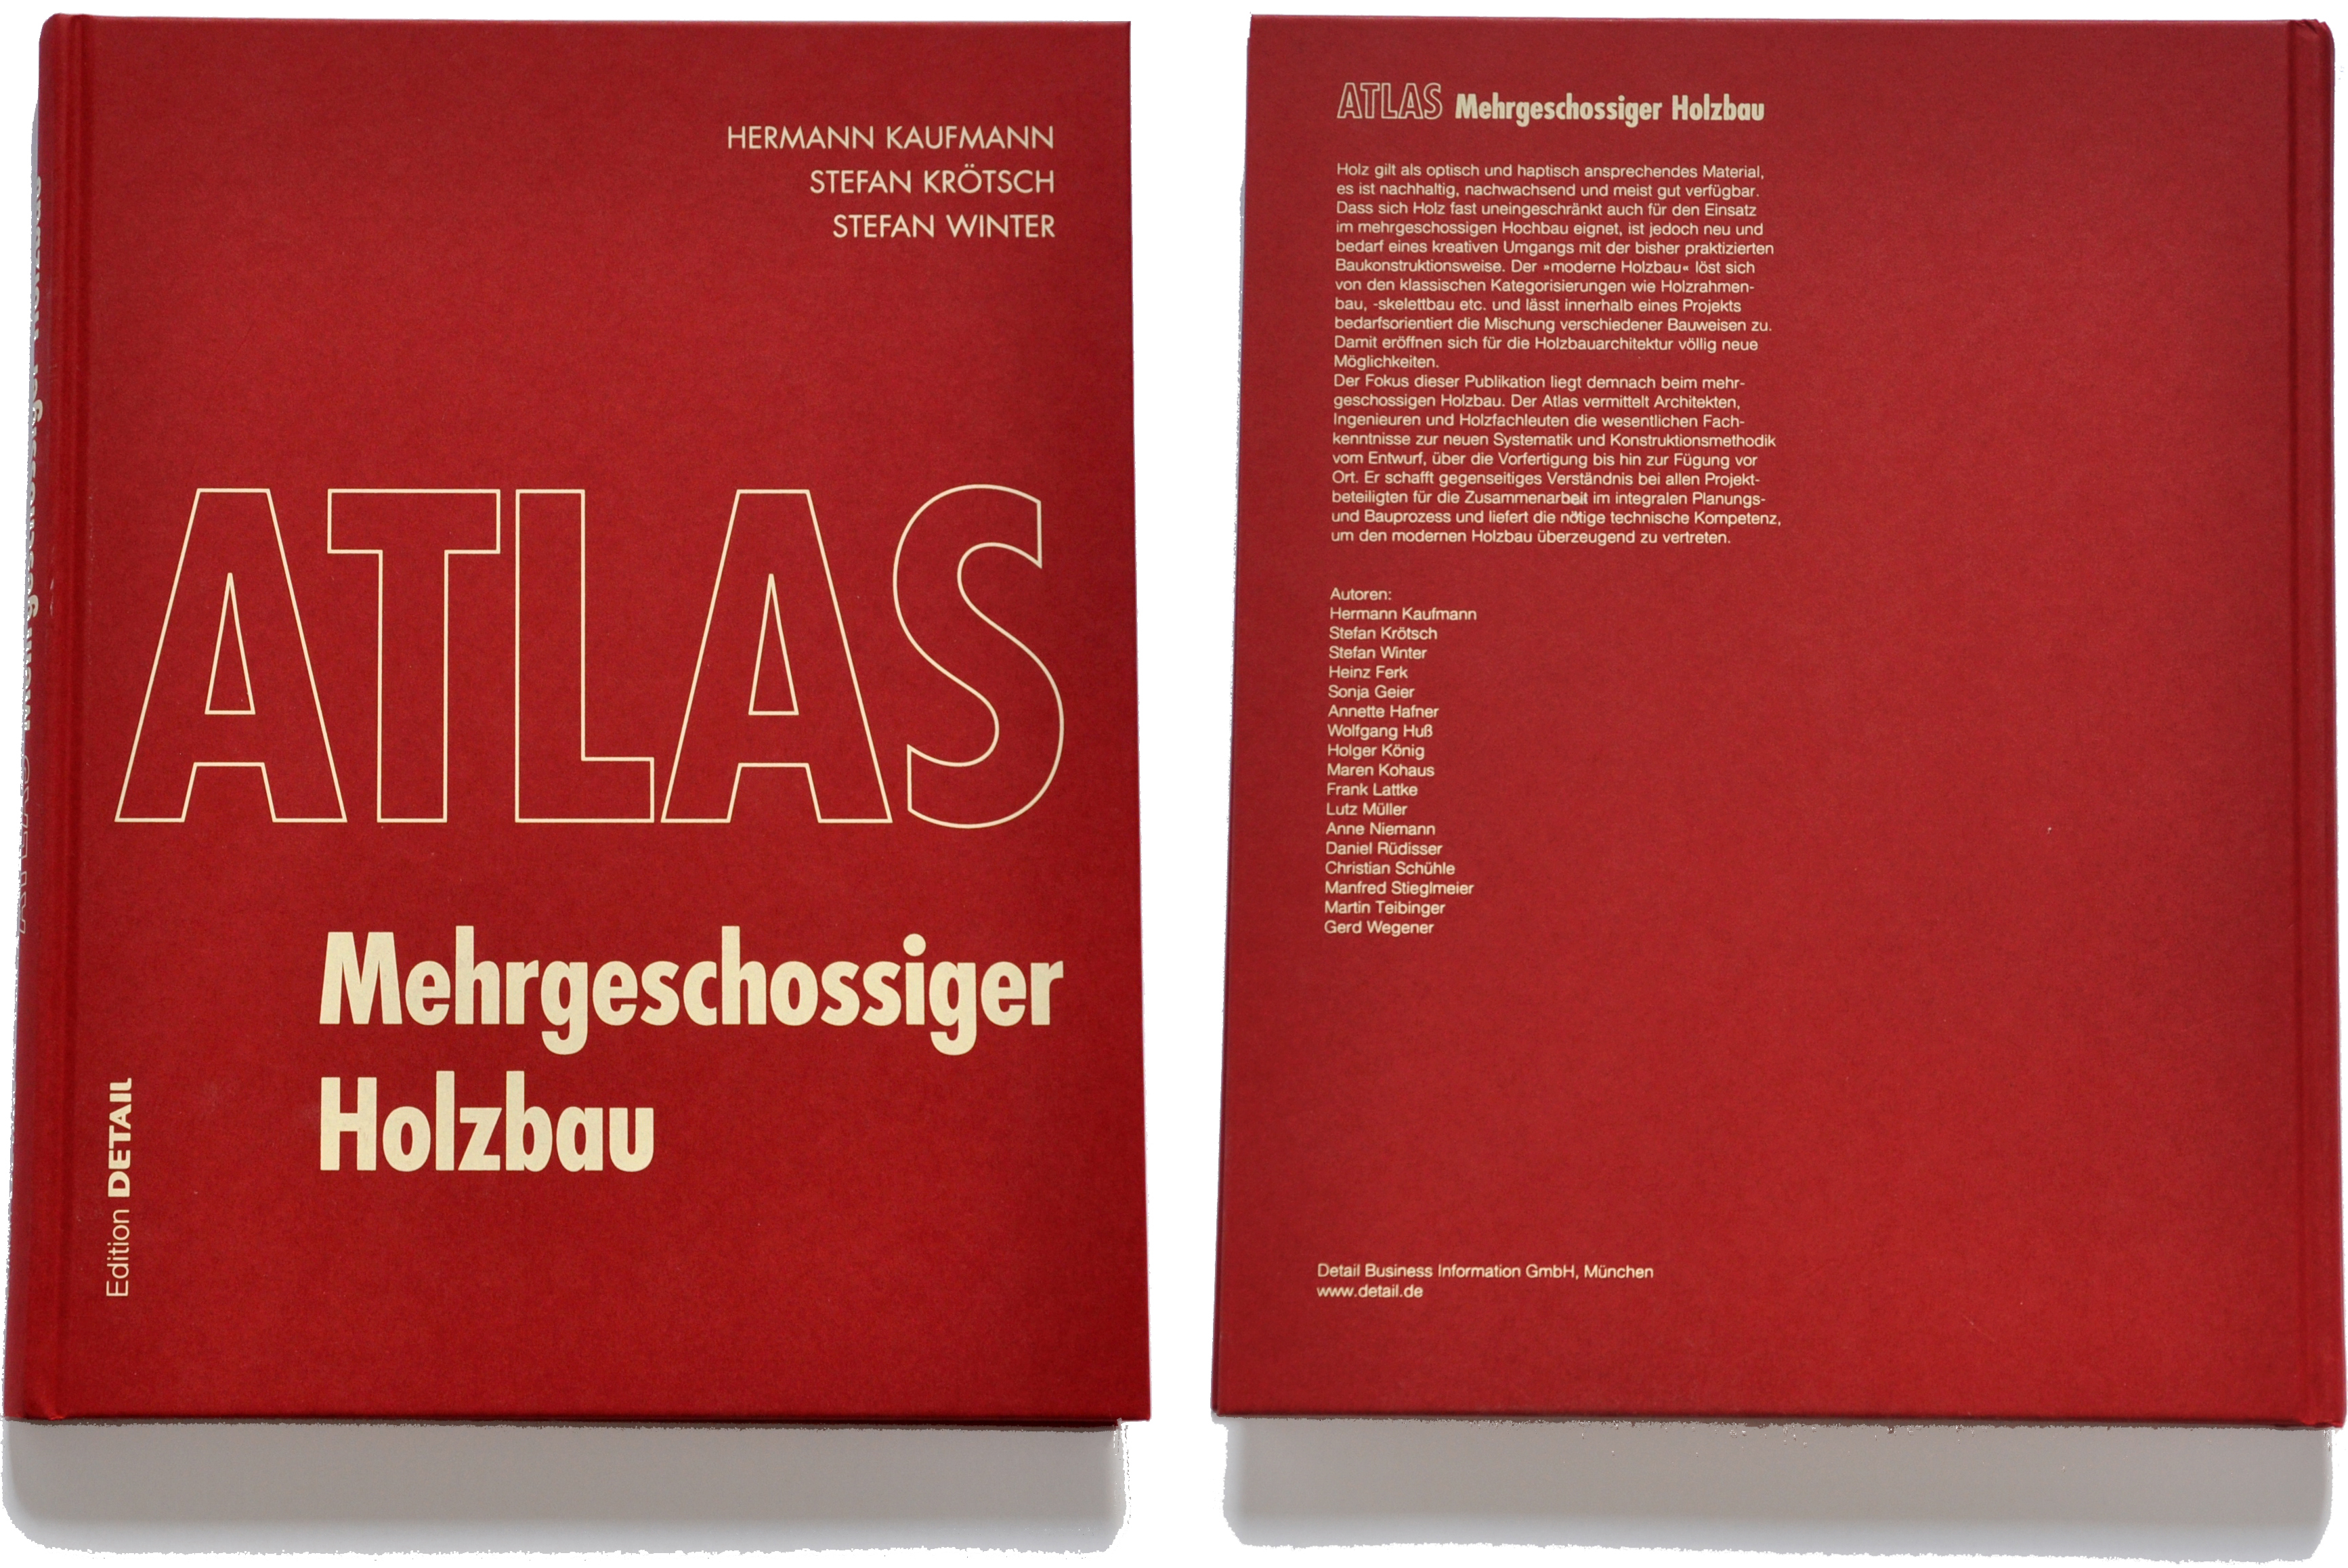 ATLAS Mehrgeschossiger Holzbau, Edition DETAIL, 2017